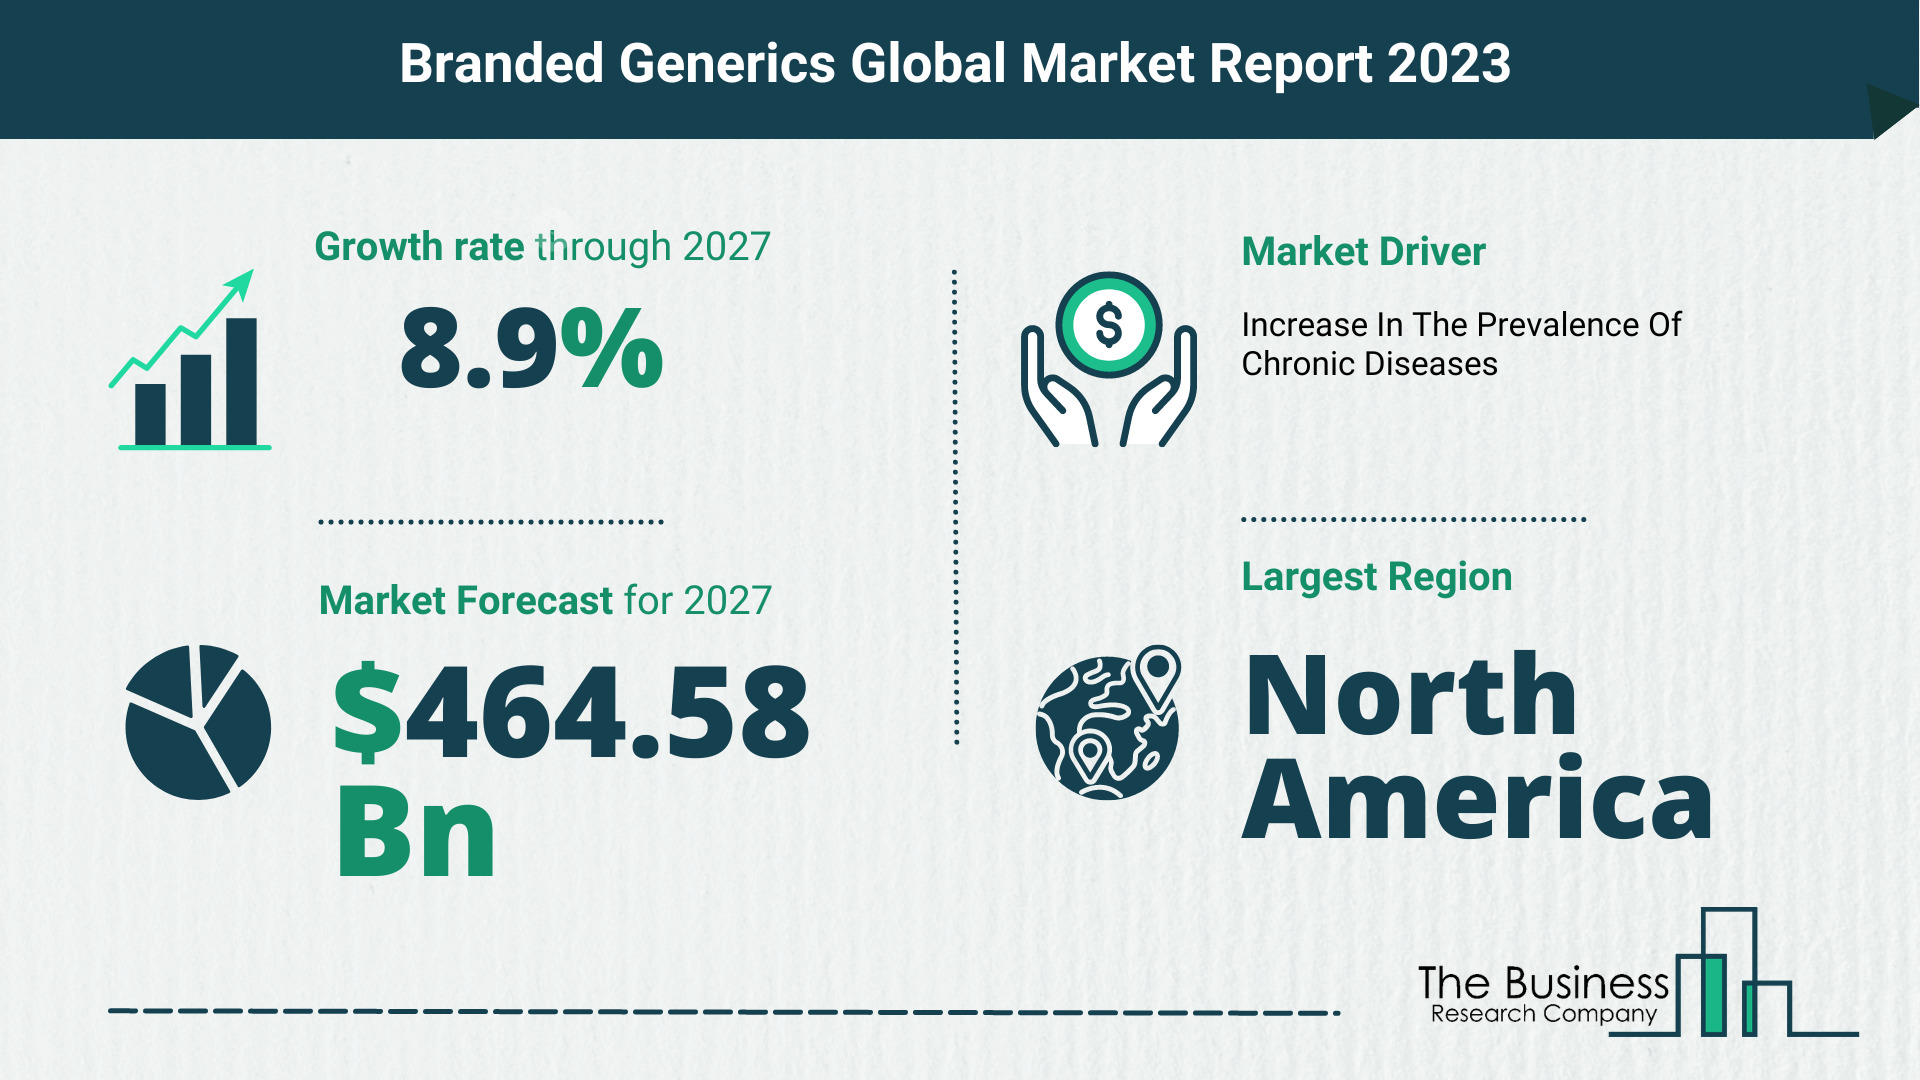 Global Branded Generics Market Opportunities And Strategies 2023